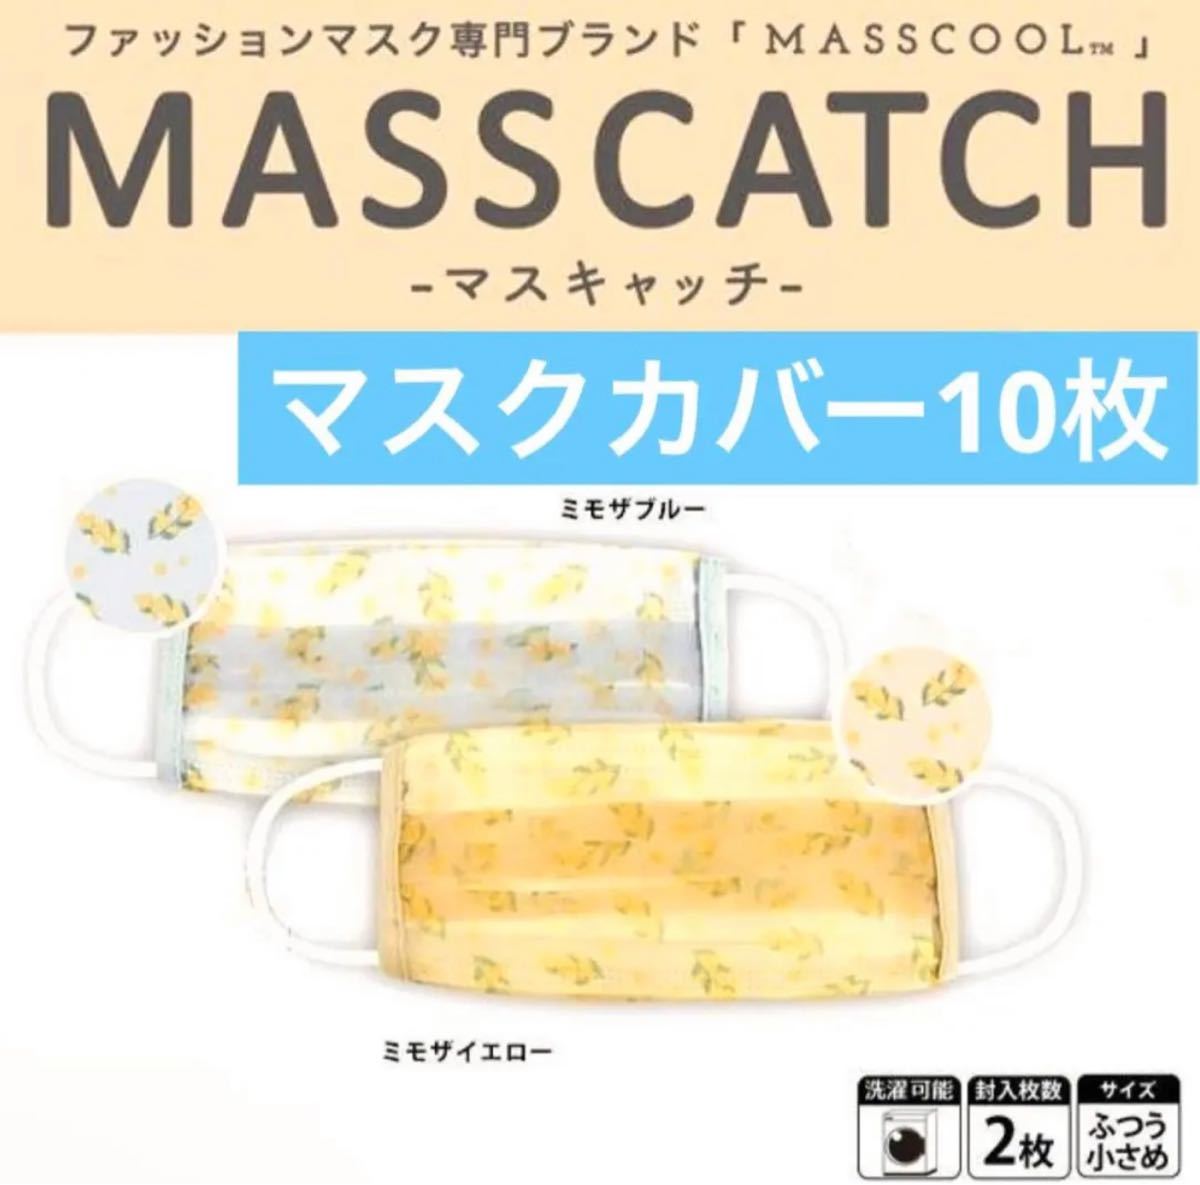 MASSCATCH マスキャッチ 不織布 マスクカバー 2枚入×10袋